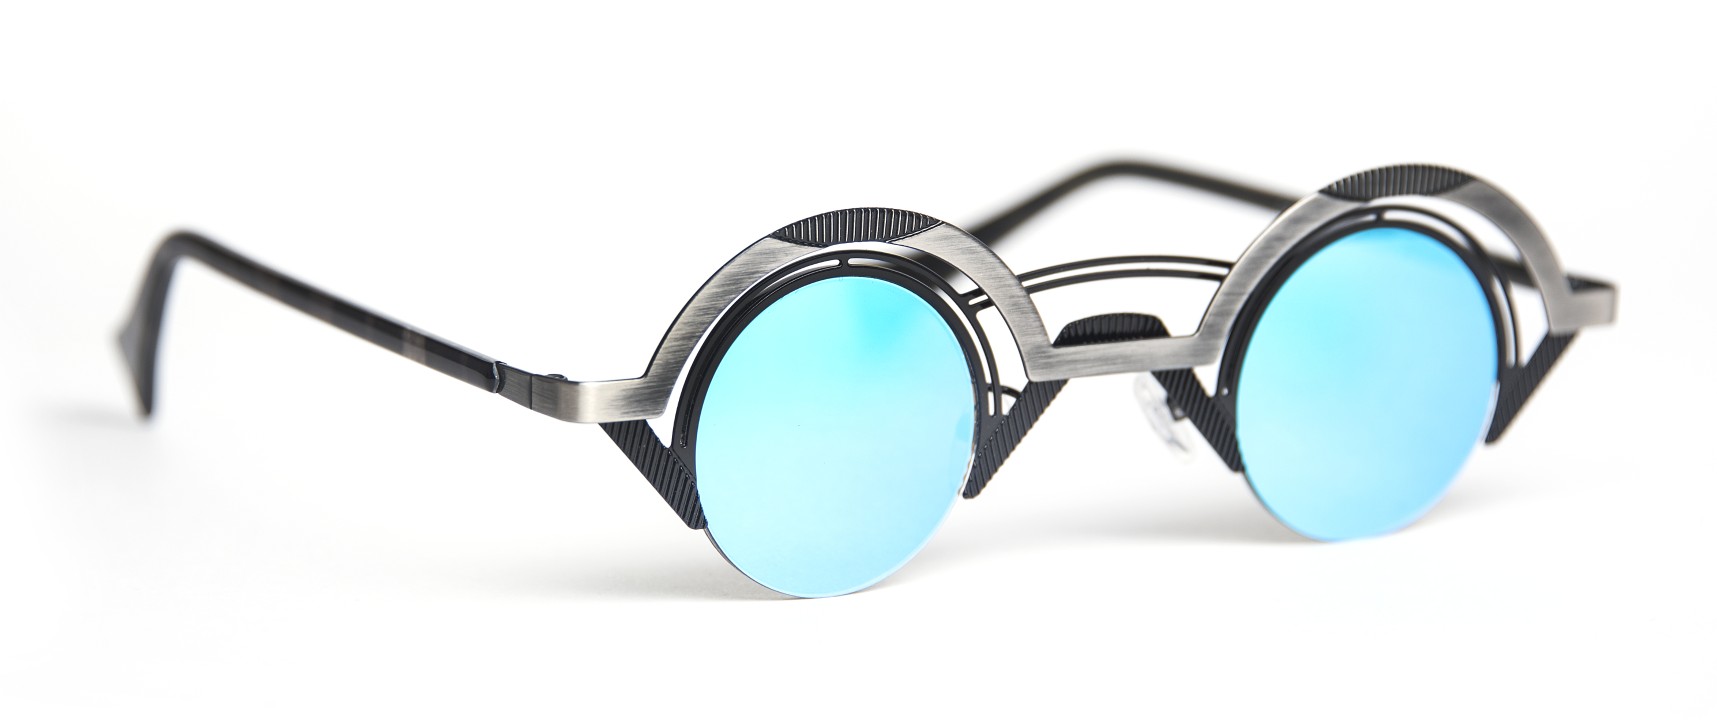 BOZ - Feature Glasses